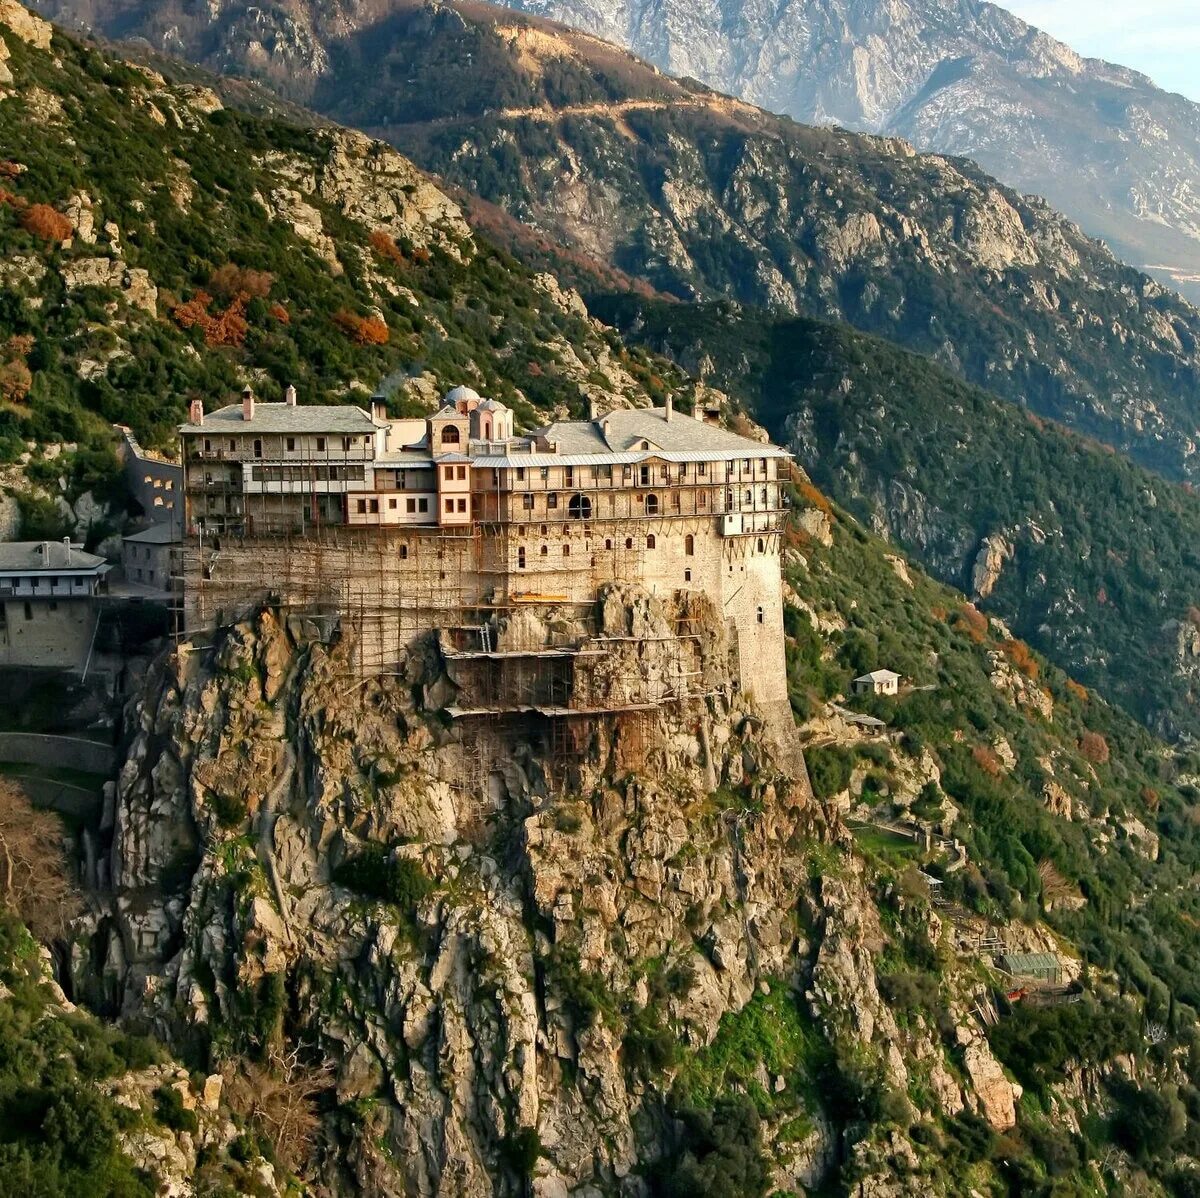 Где гора святой афон. Святая гора Афон. Афон Греция монастырь. Афонский монастырь Симонопетра. Монастырь на горе Афон в Греции.